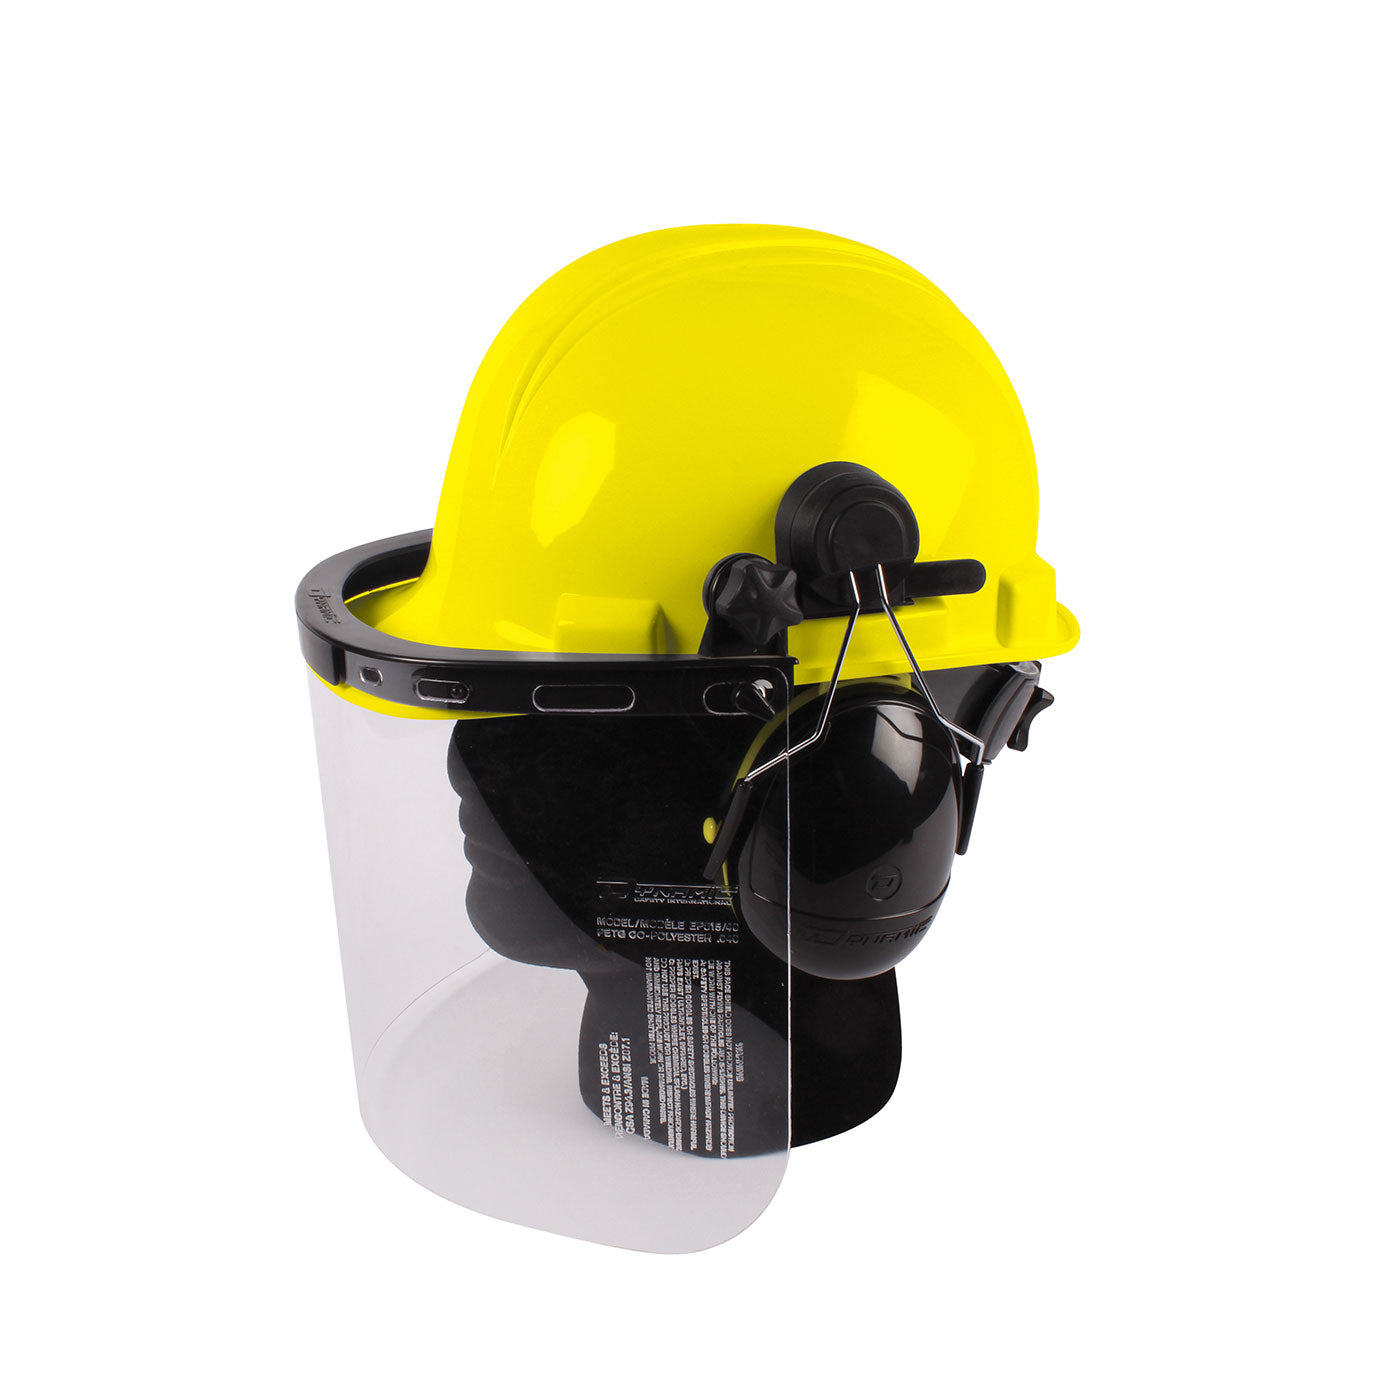 SAFE CHEMICAL HANDLING PROTECTION PPE KIT